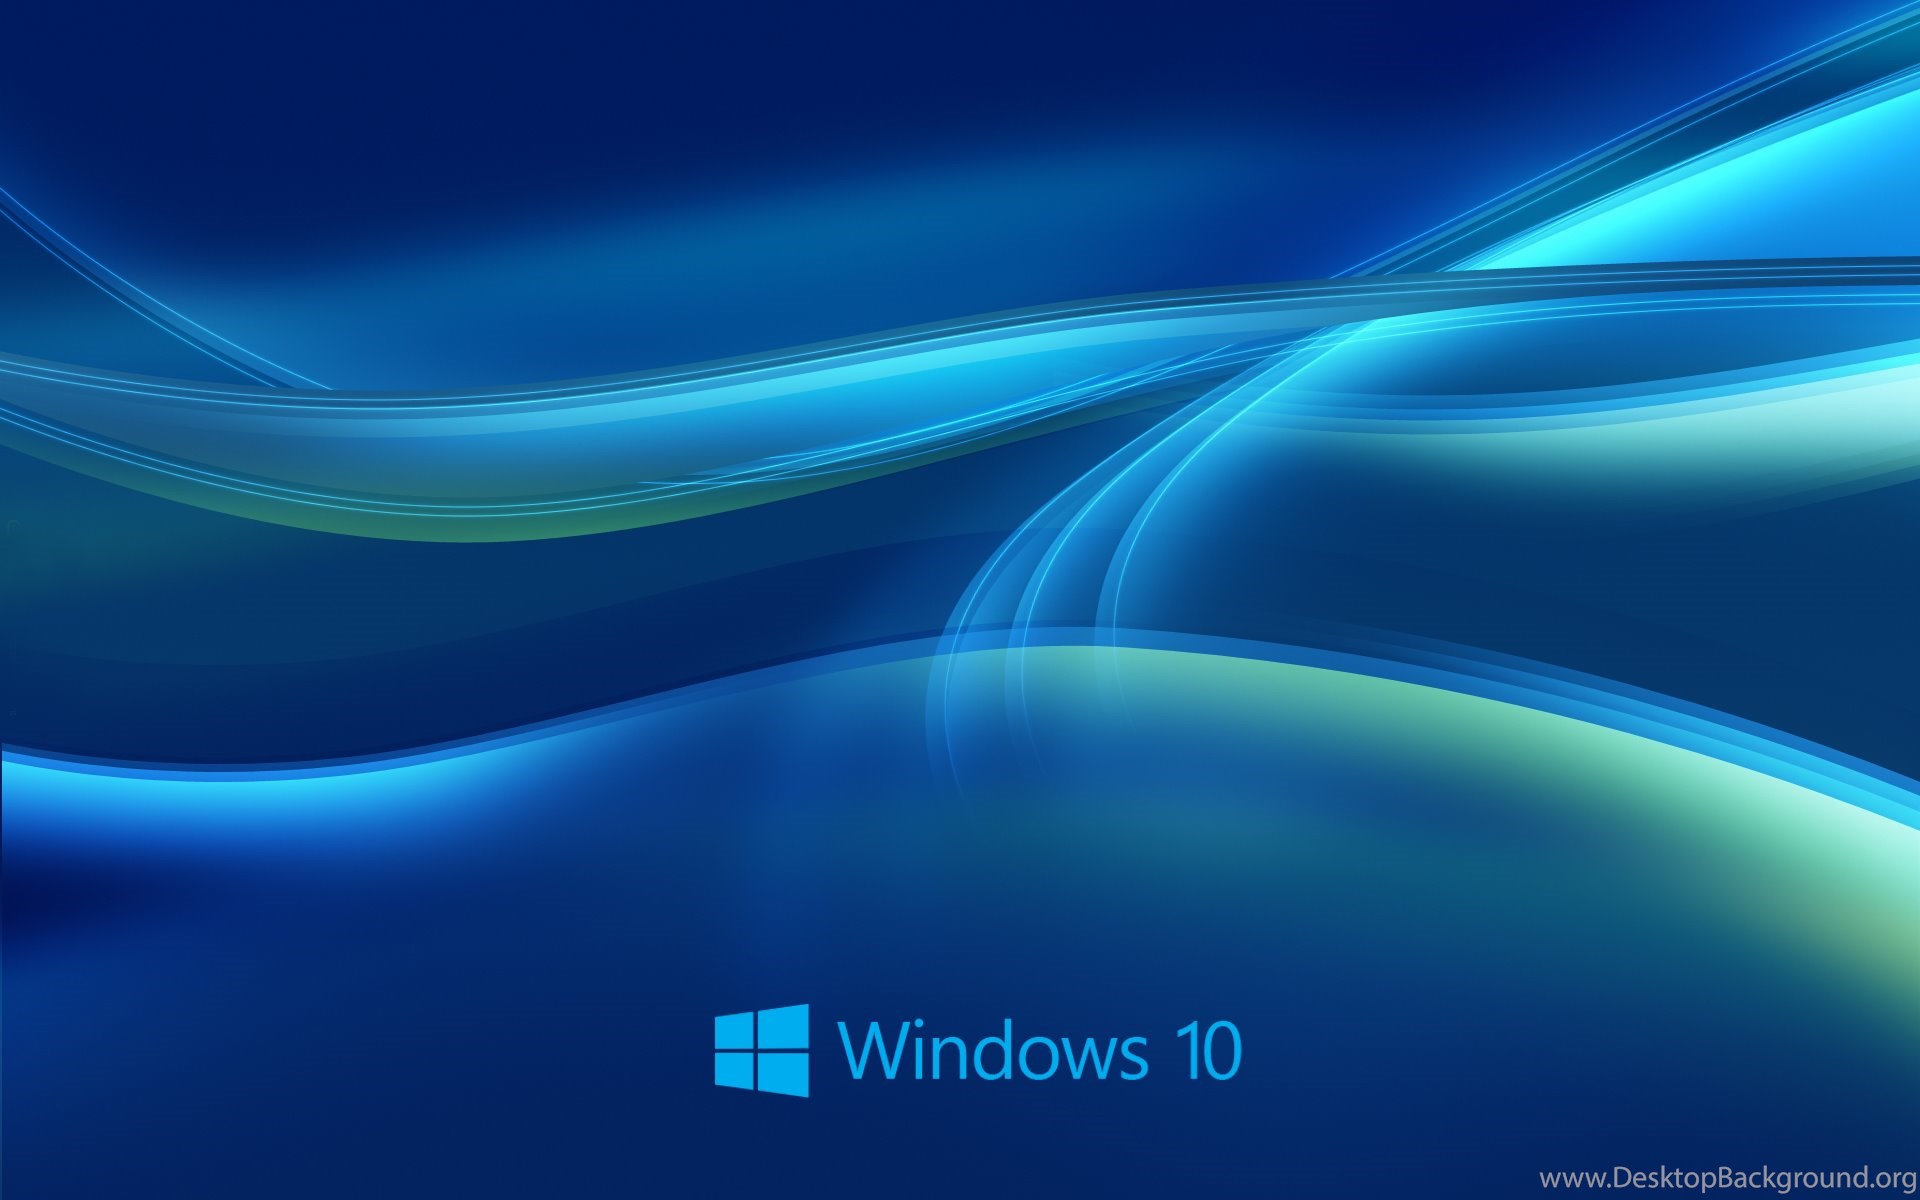 Windows 10 Ultra HD Quality 4k Wallpaper Backgrounds 4055n ...